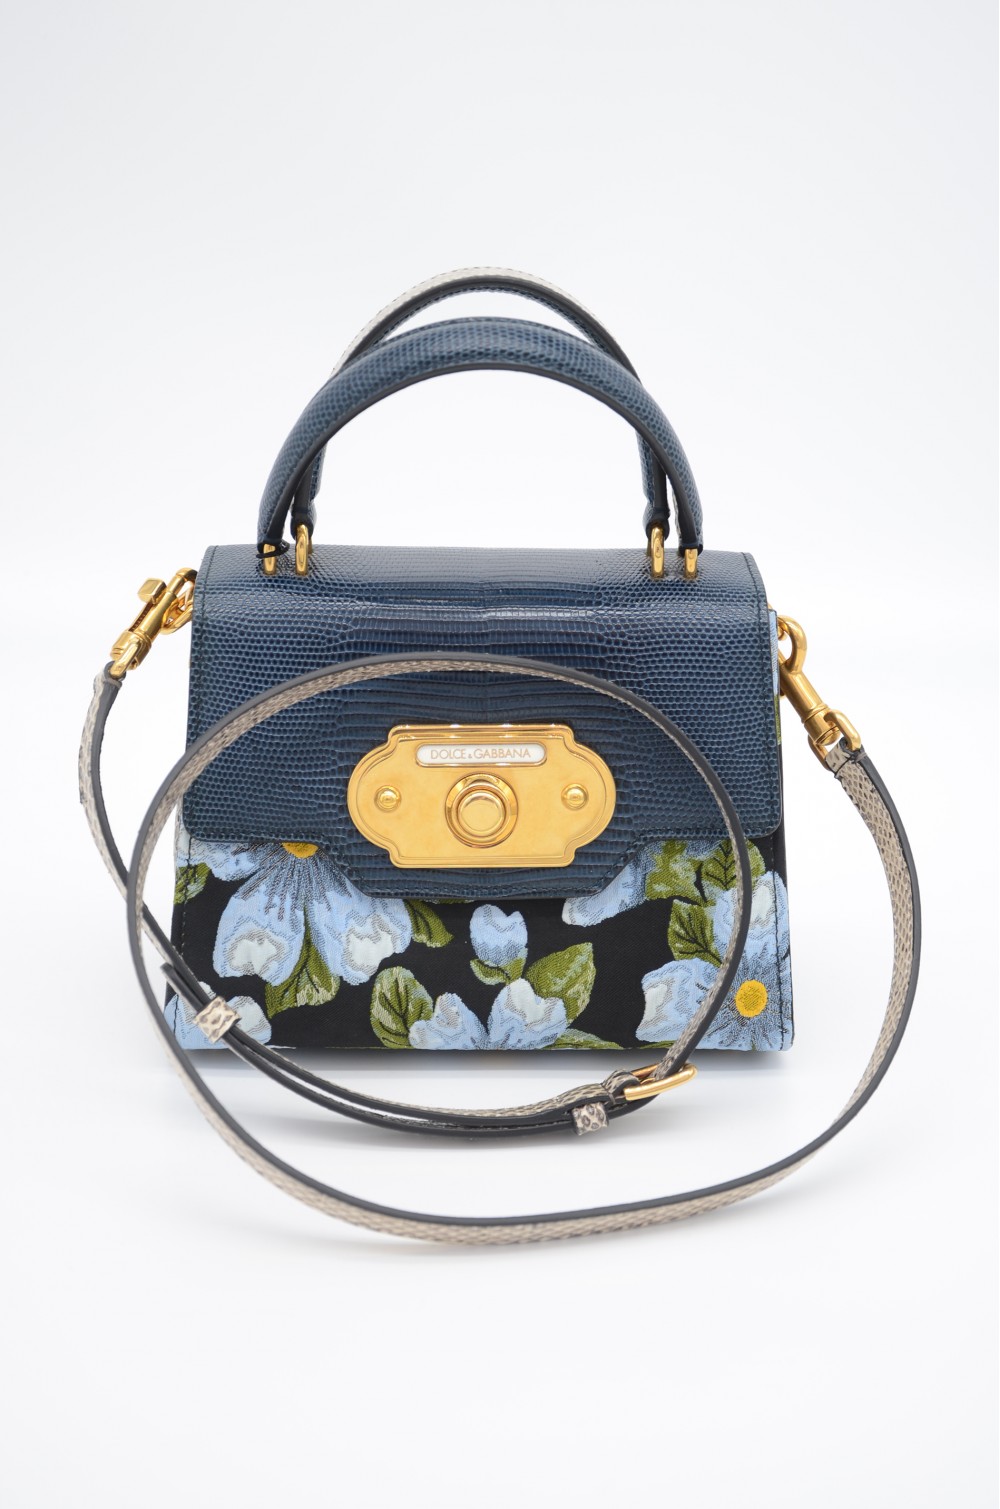 dolce and gabbana women's handbags